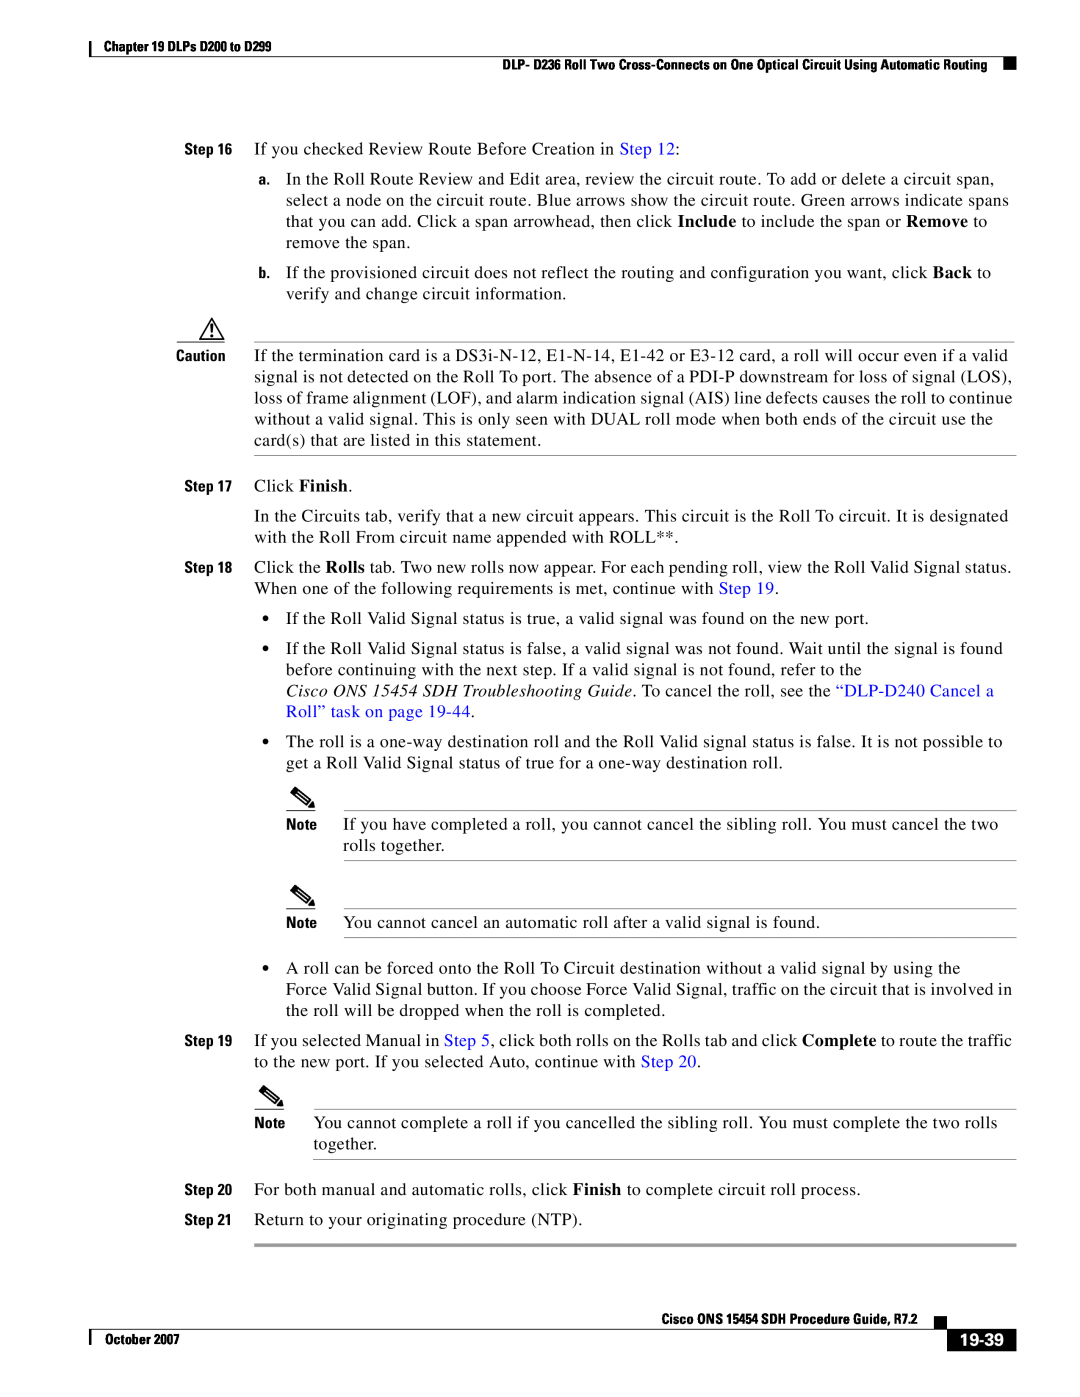 Cisco Systems D200 manual 19-39, Click Finish 